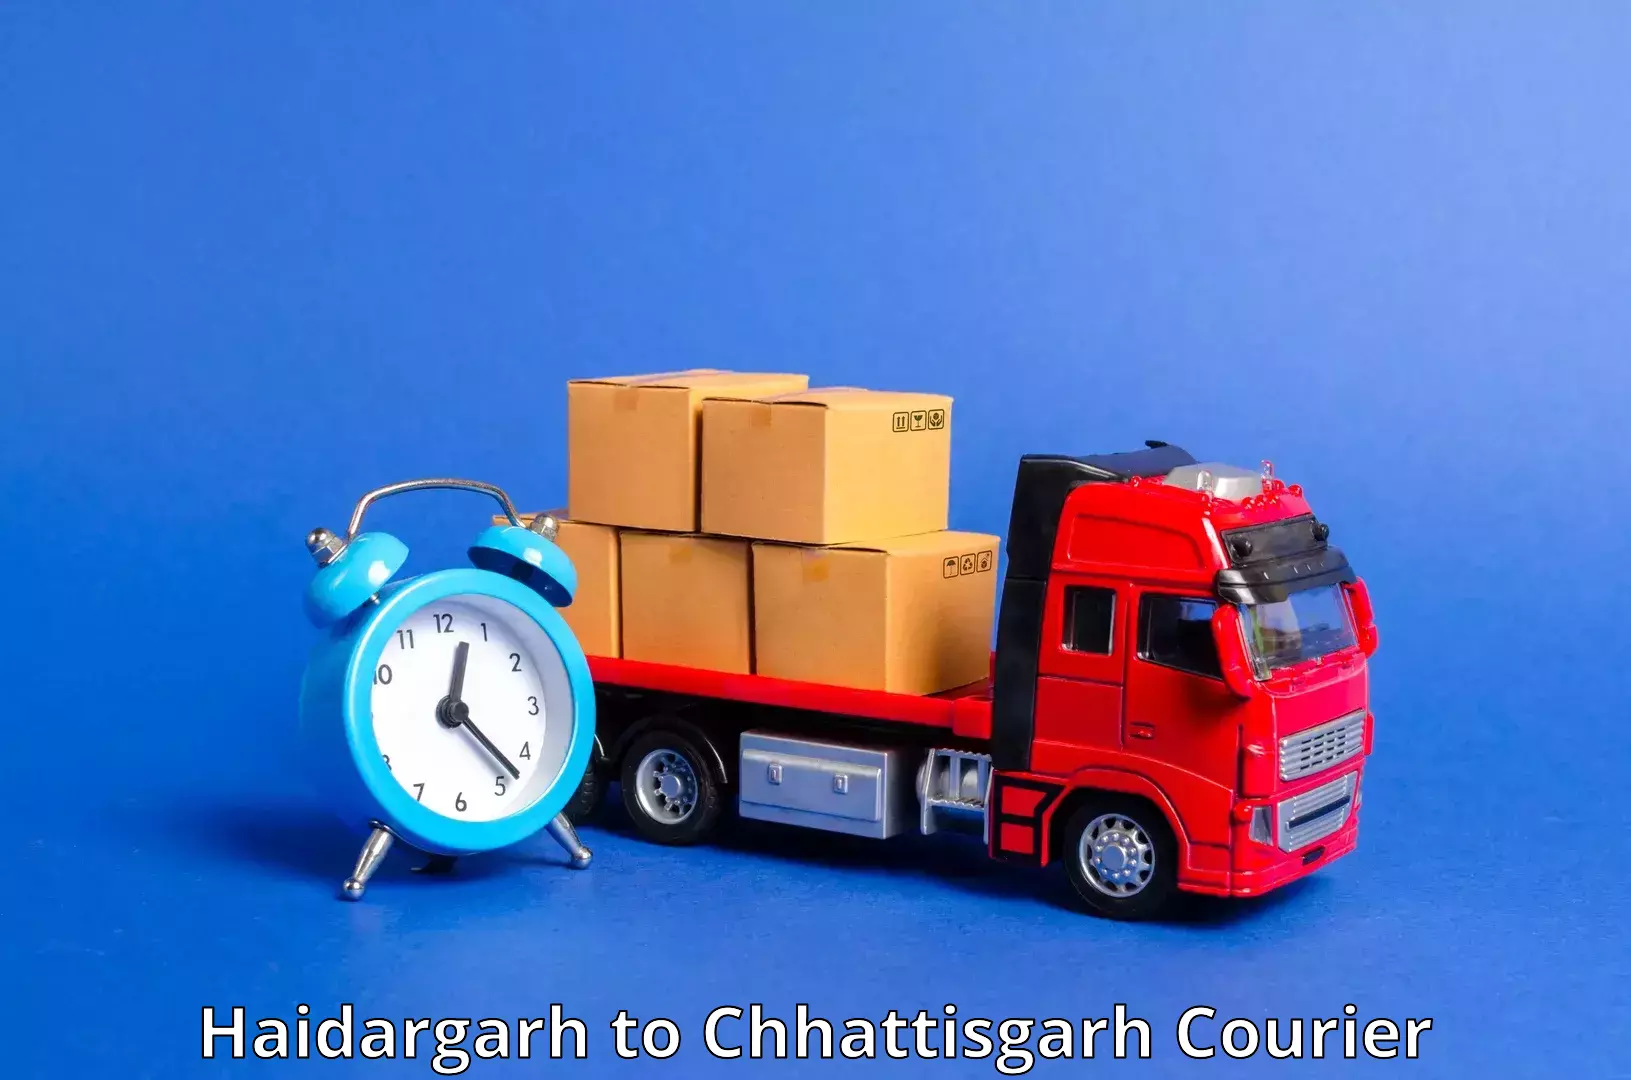 Courier service booking Haidargarh to Berla